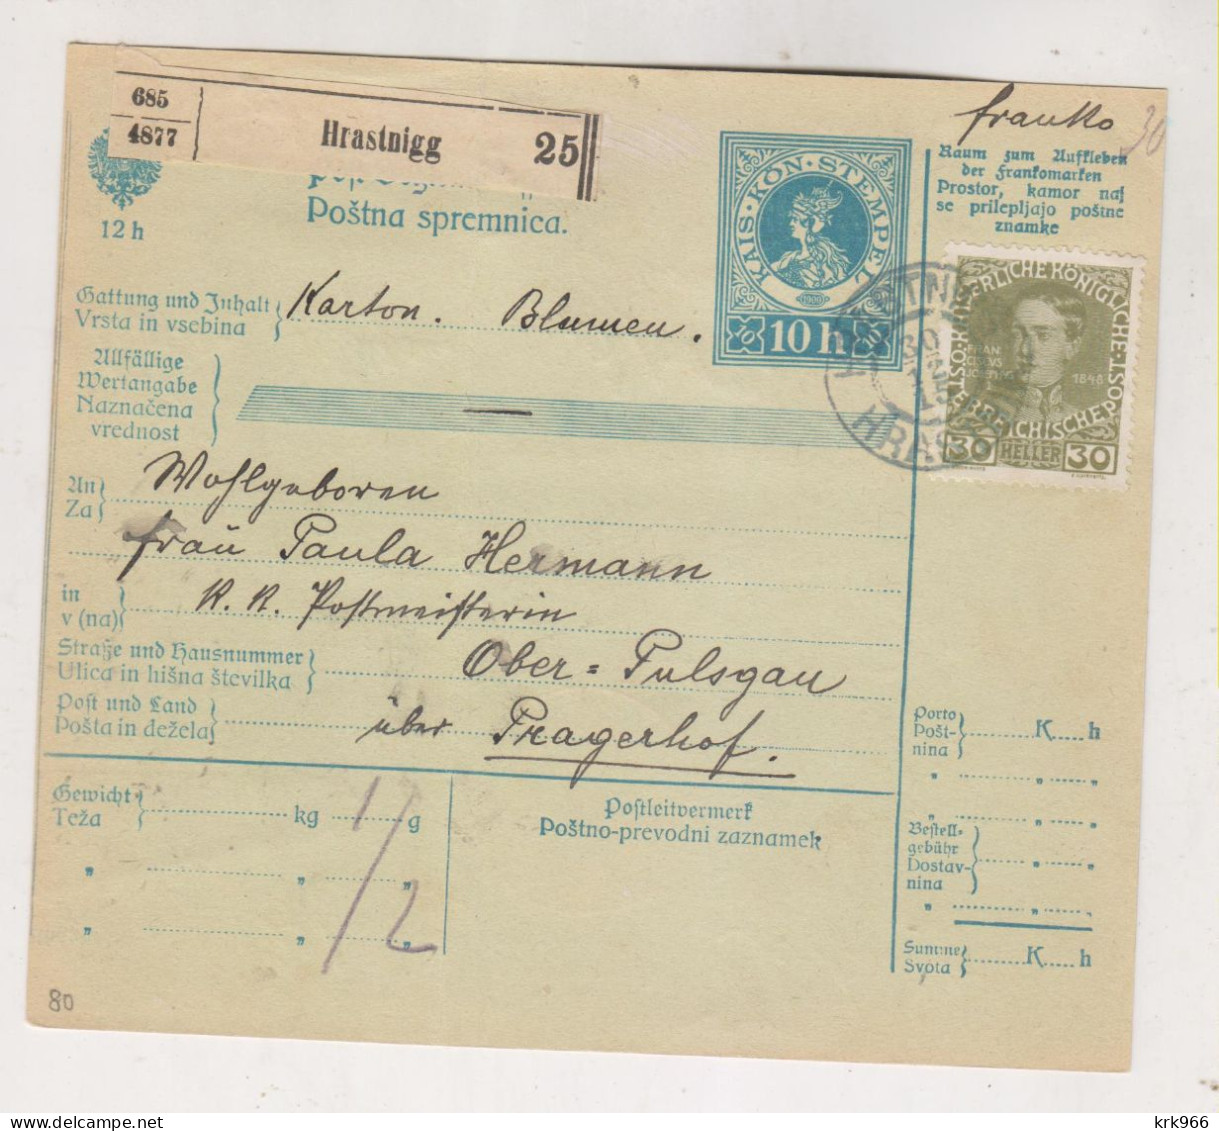 SLOVENIA,Austria 1915 HRASTNIGG HRASTNIK Parcel Card - Slowenien